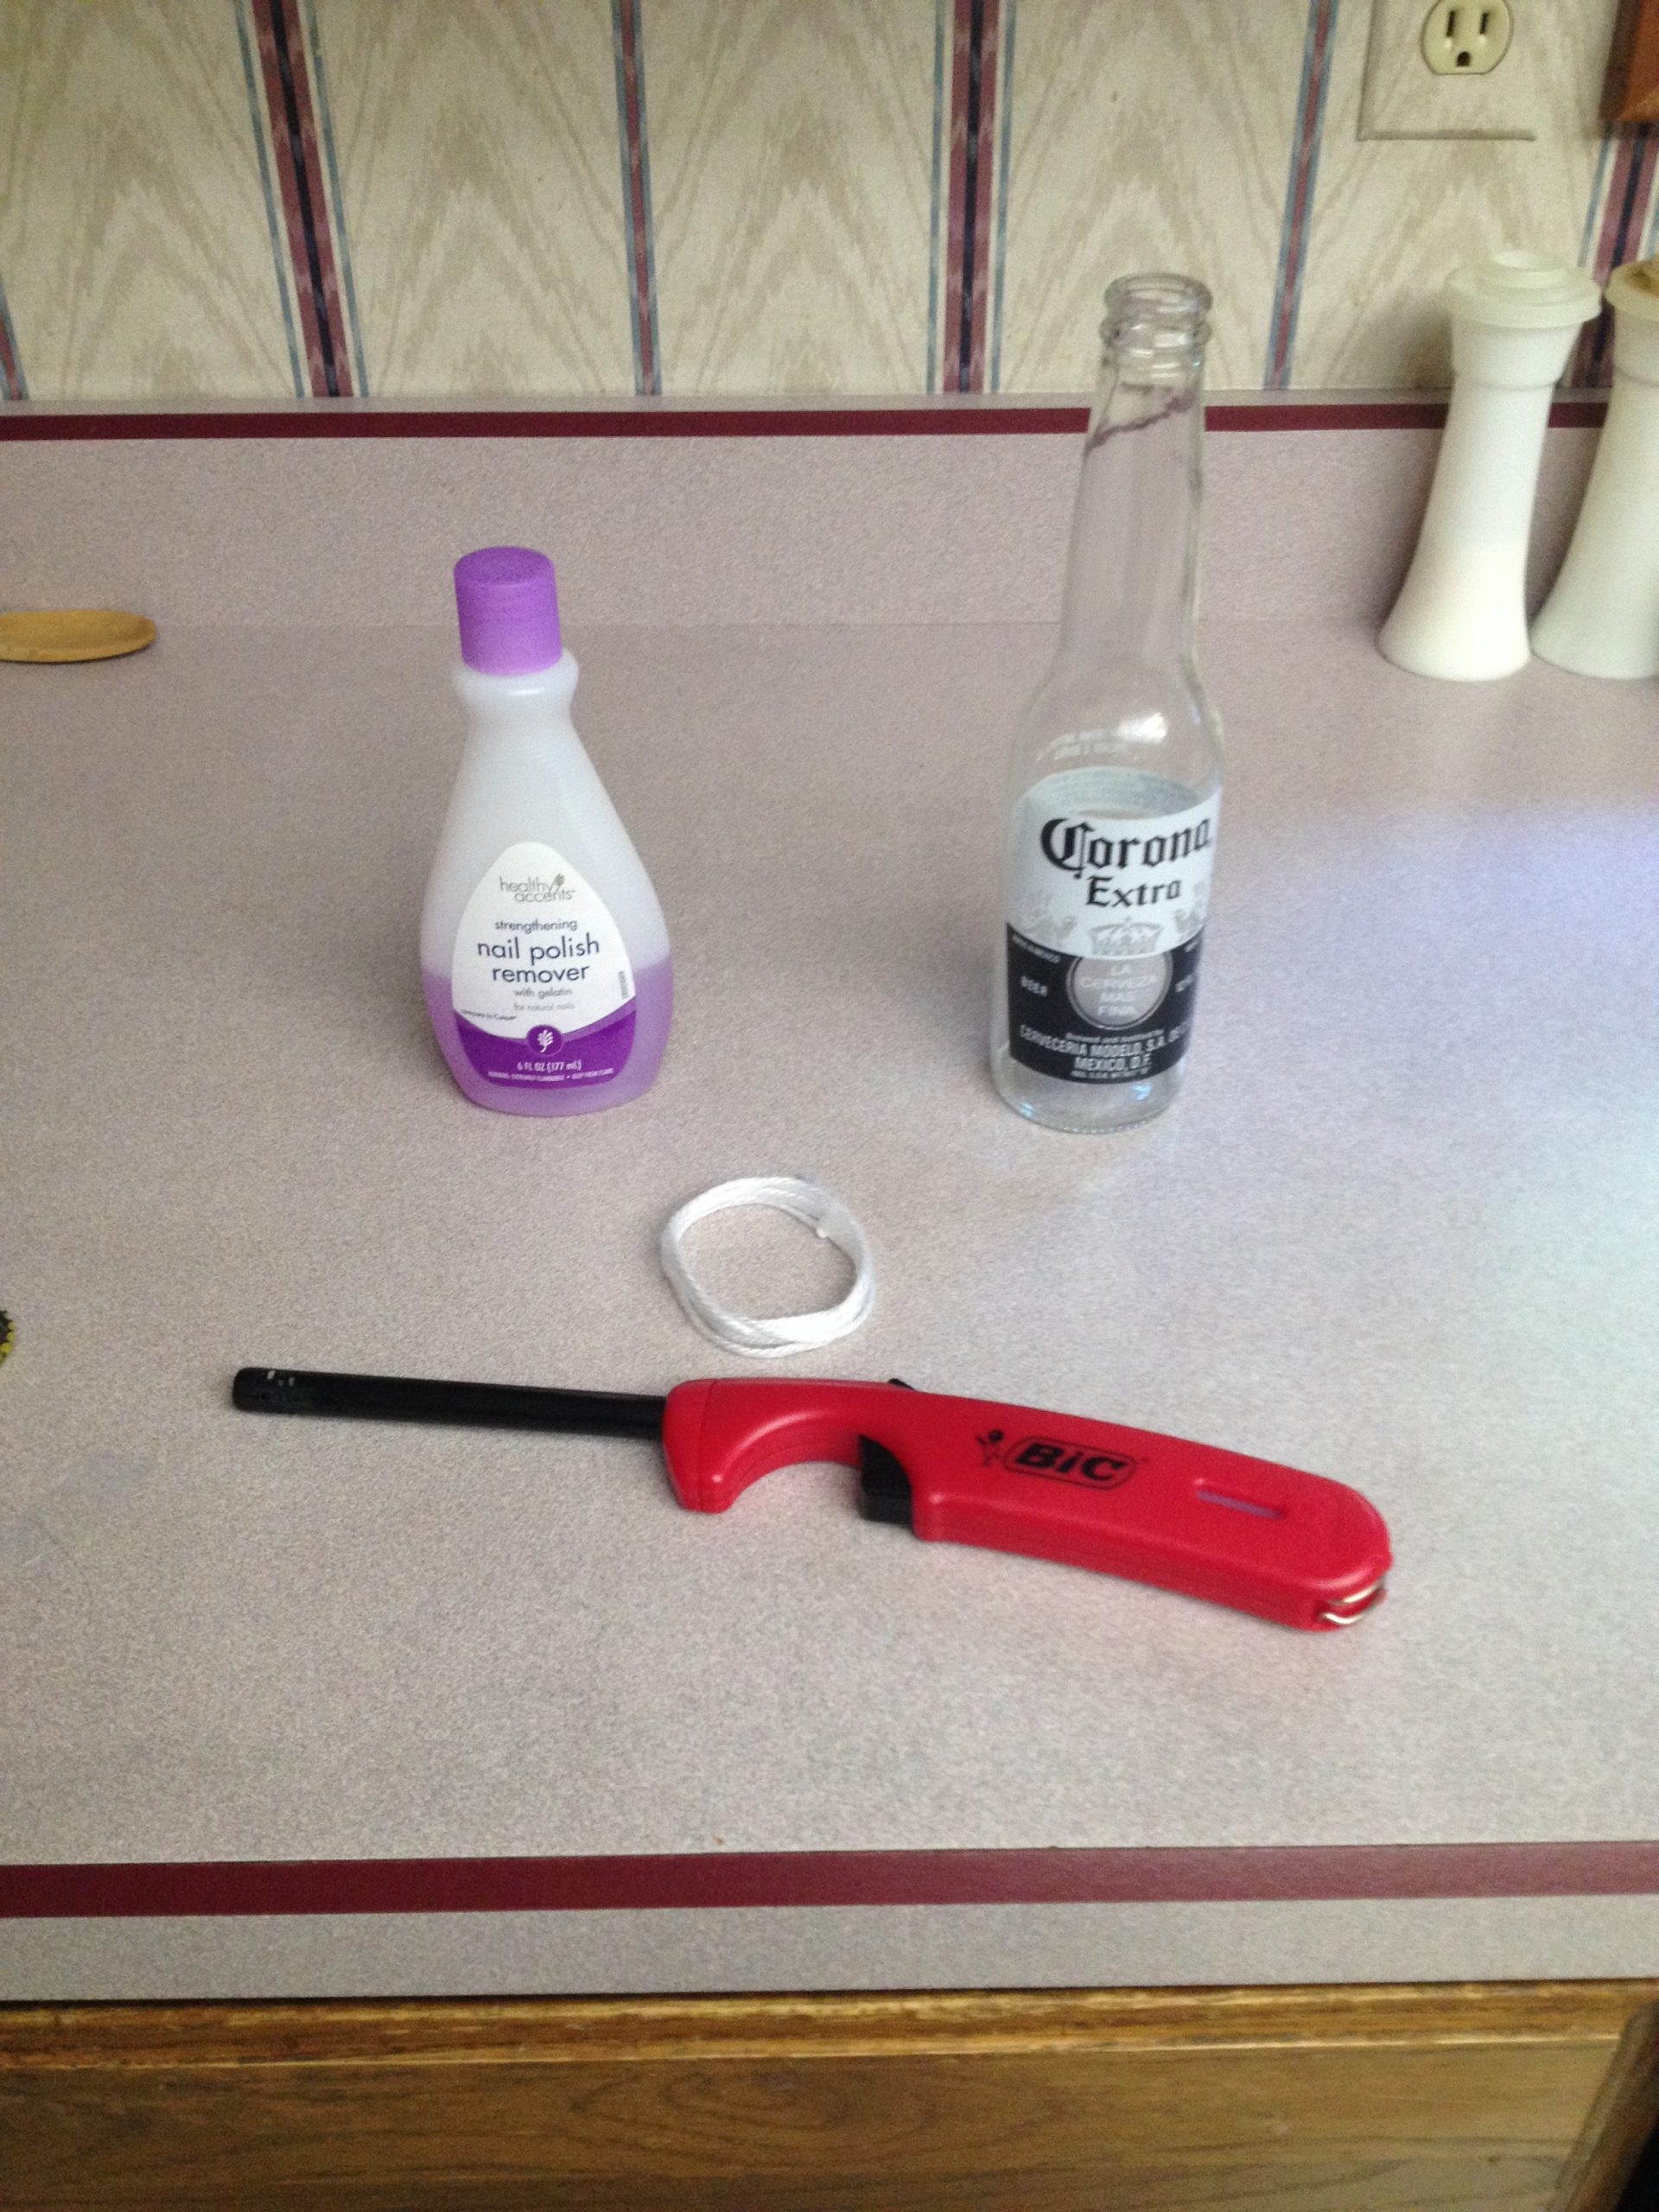 How to Make a Corona Glass